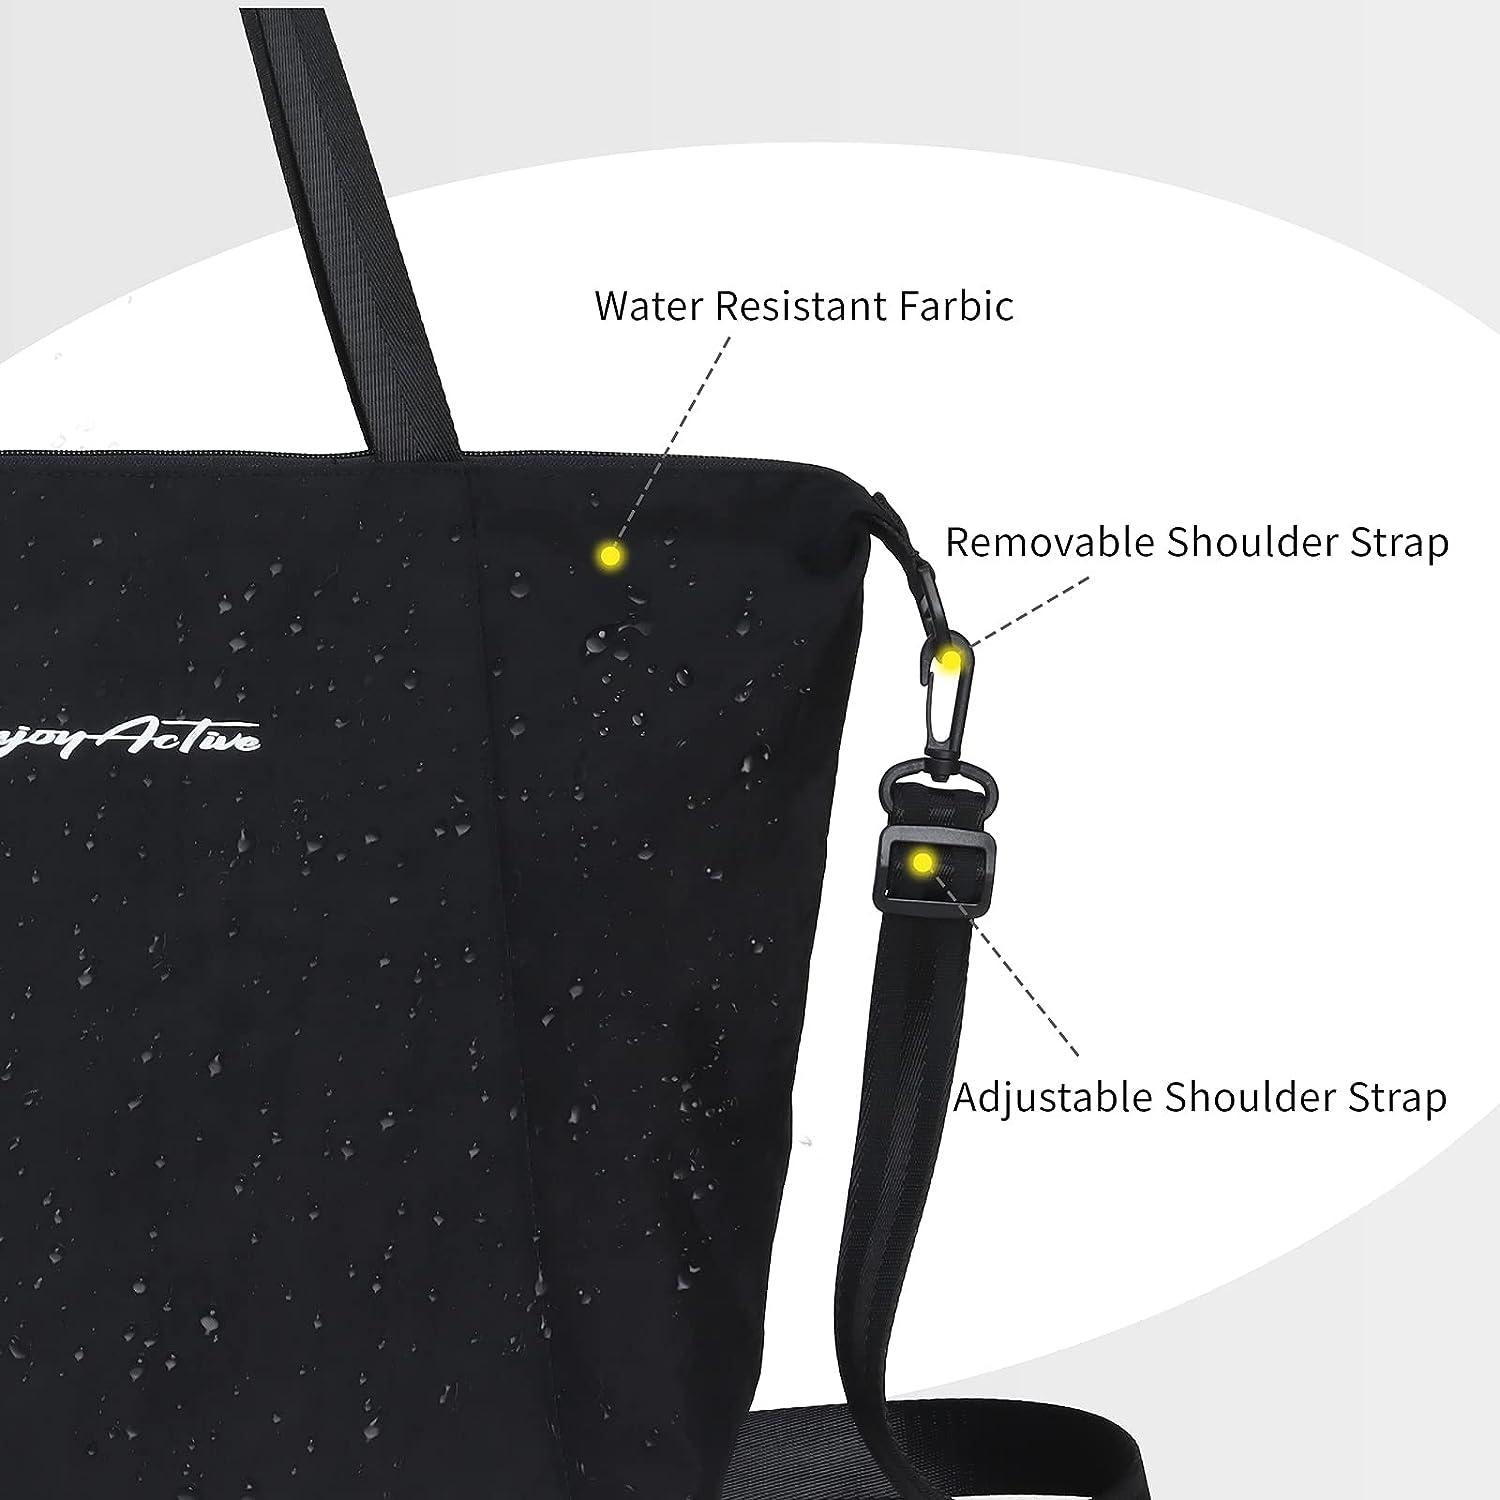 EnjoyActive Yoga Mat Bag, Full Zip, Multi Pocket, Waterproof, Lightweight, Yoga  Bag with 1/4 1/3 Thick Yoga Mat Carrier